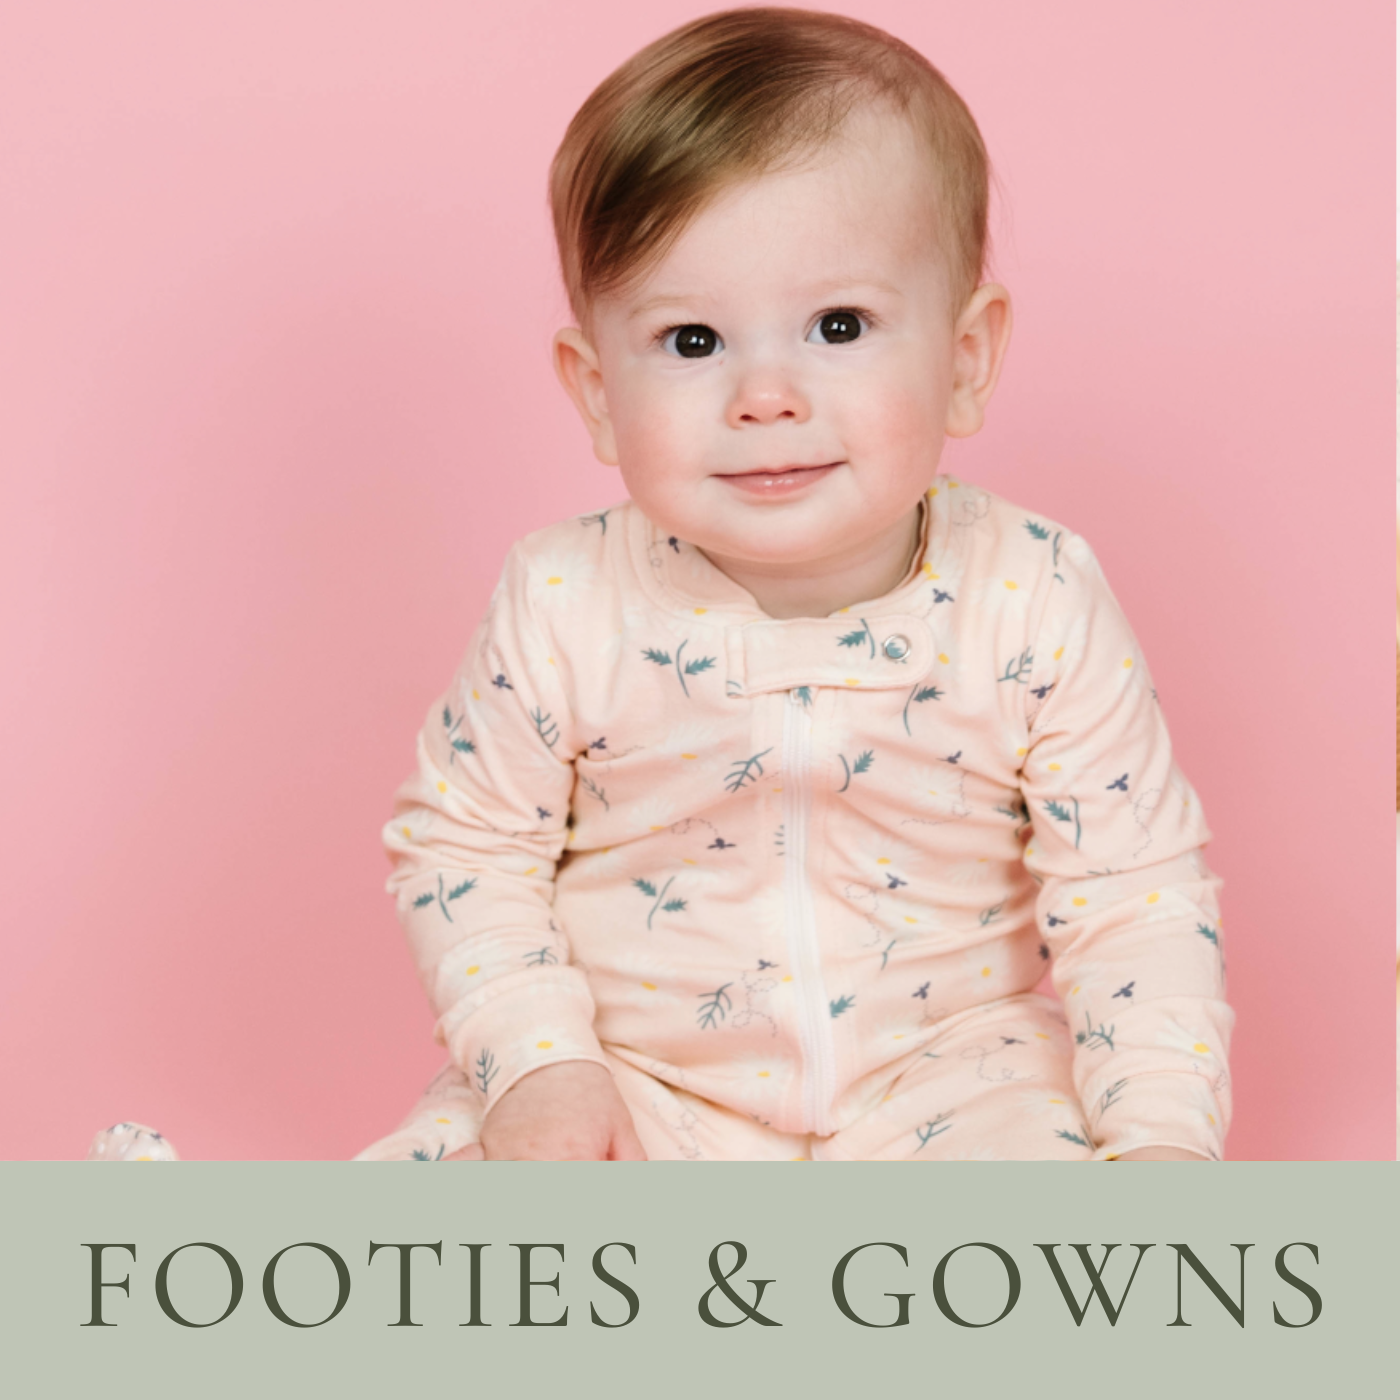 Footies & Gowns